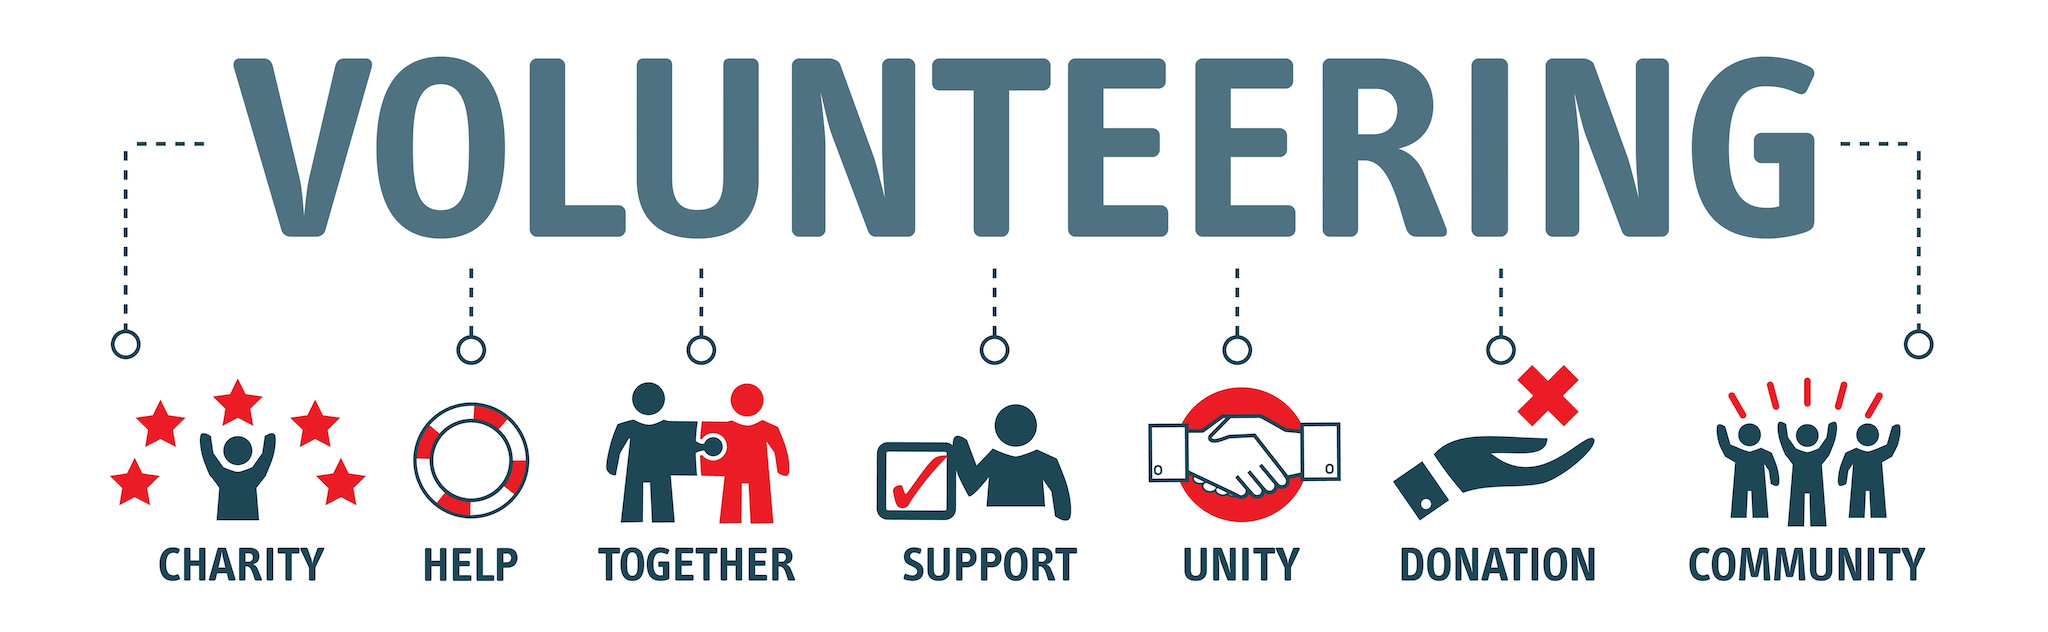 Banner Volunteer Voluntary Volunteering vector concept with icons